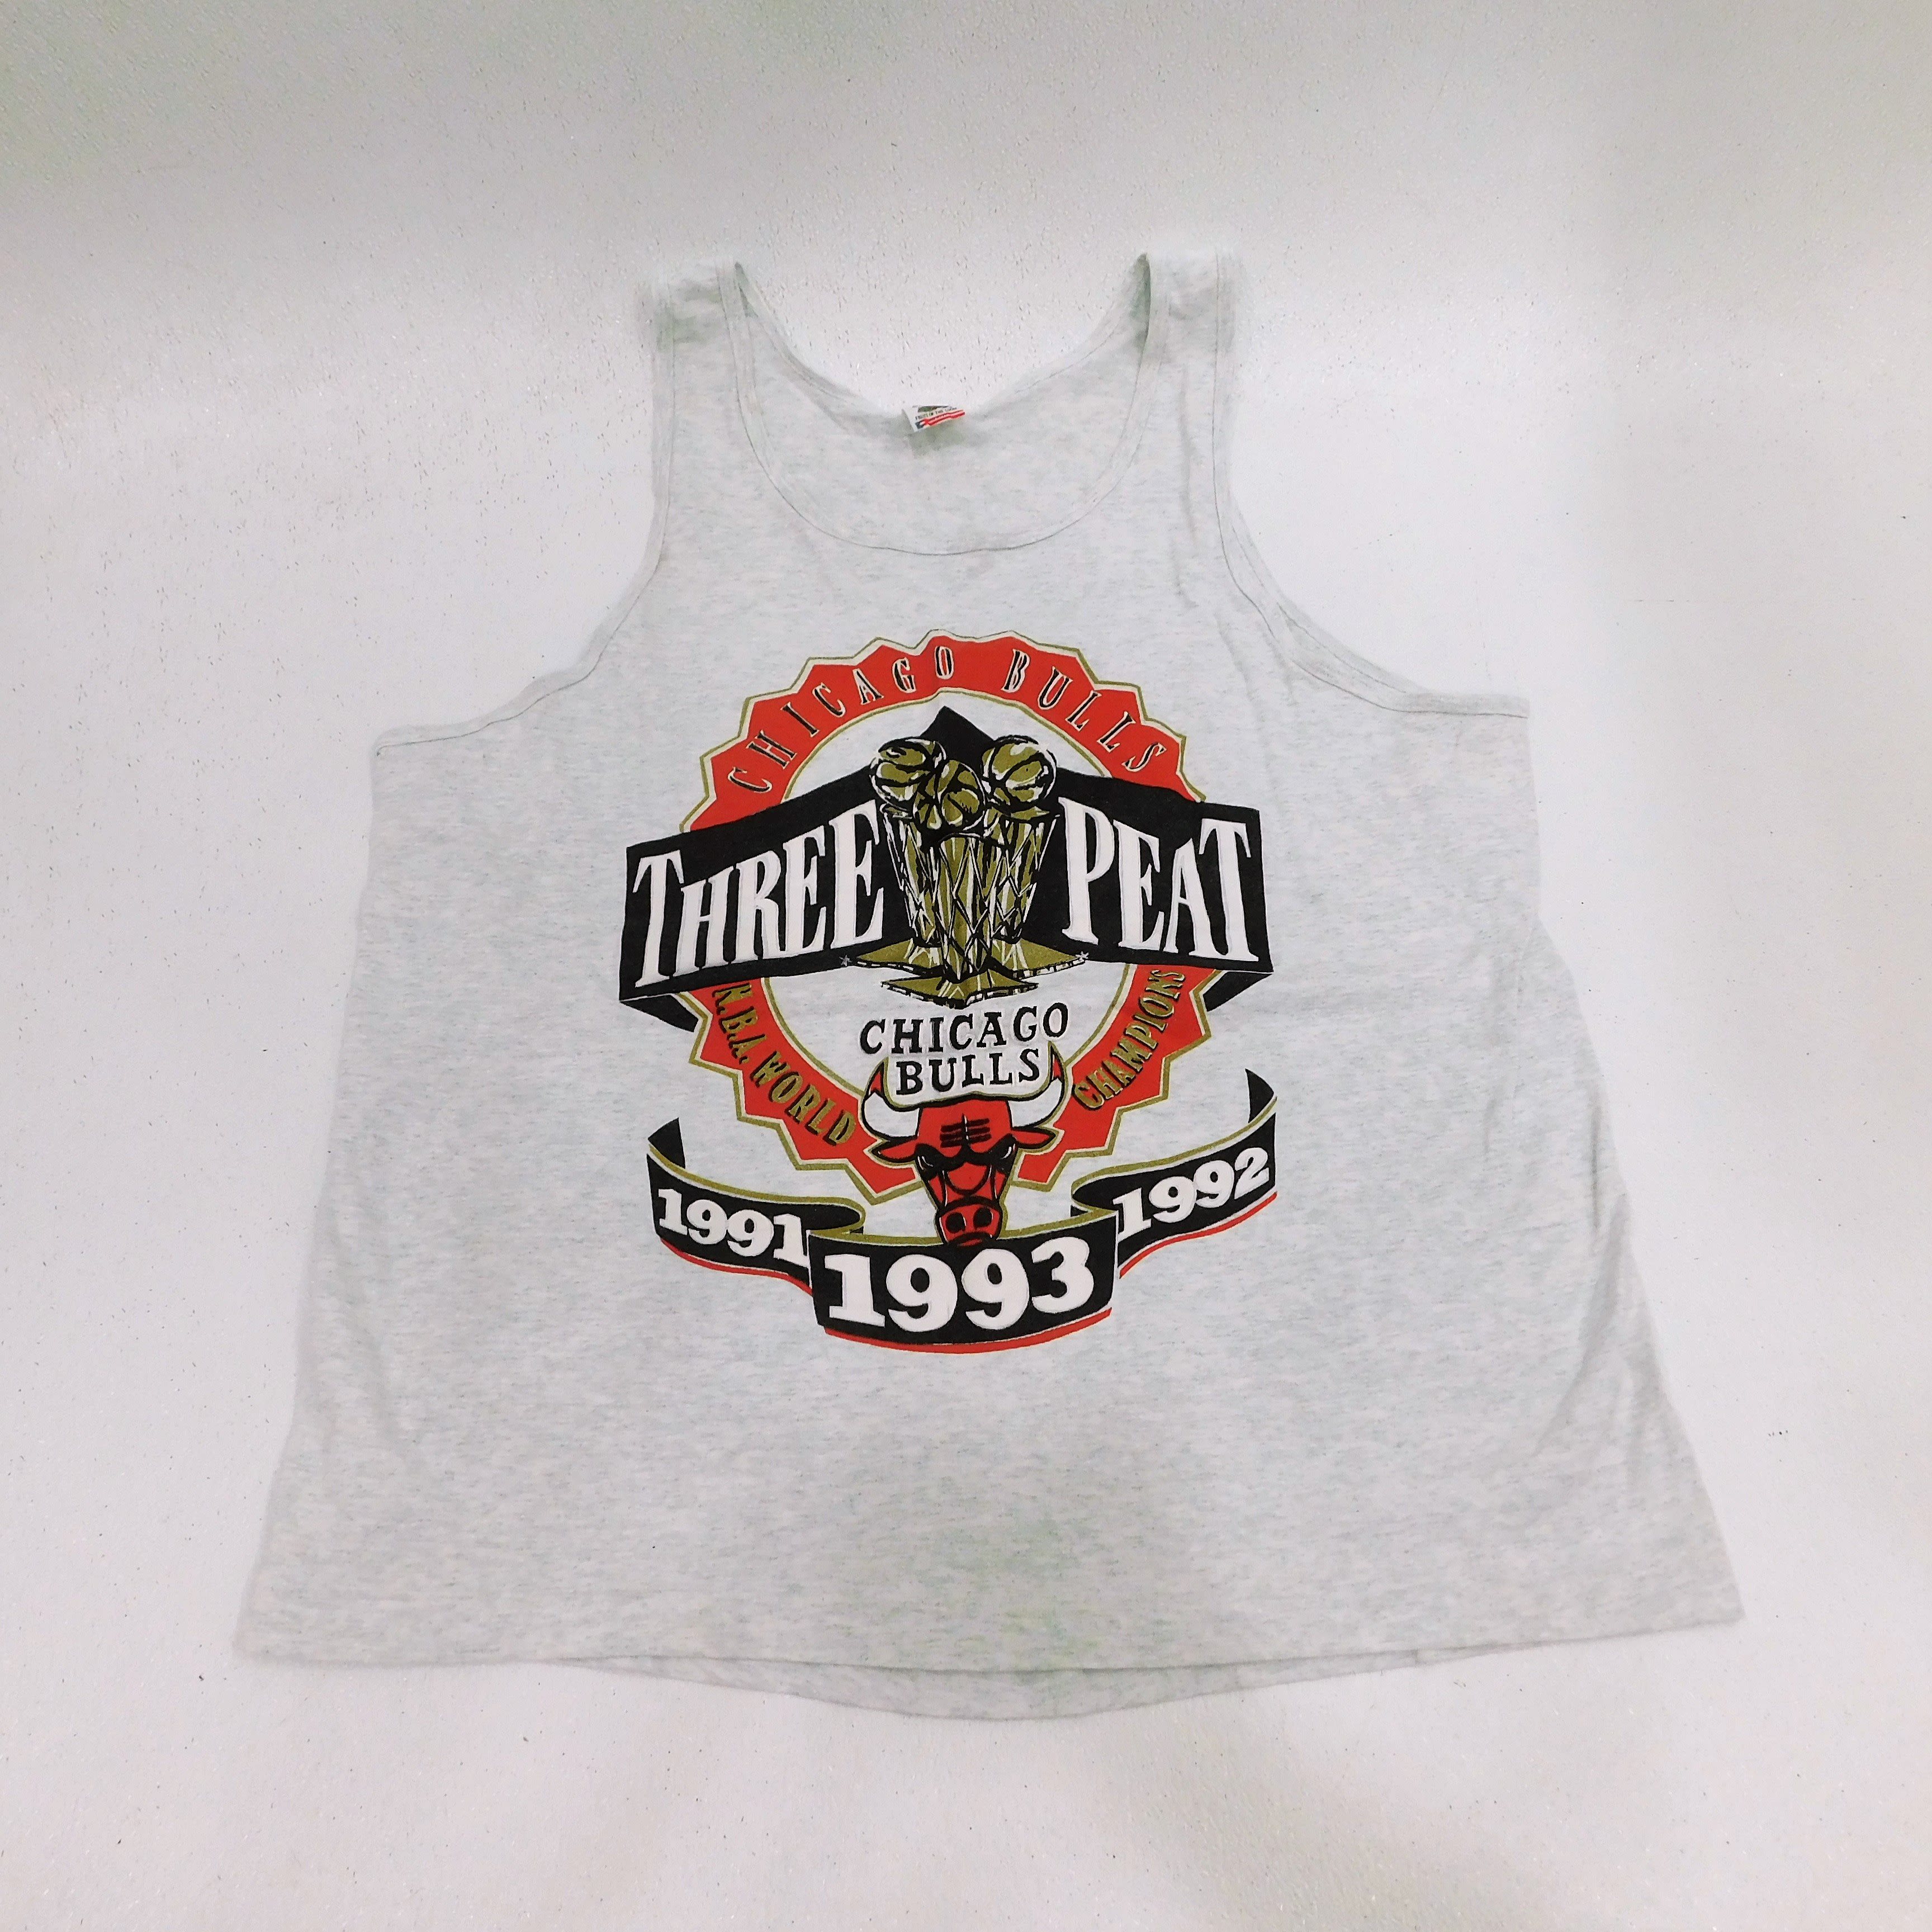 Buy the VTG 1993 Chicago Bulls NBA World Champs Three Peat Men's 